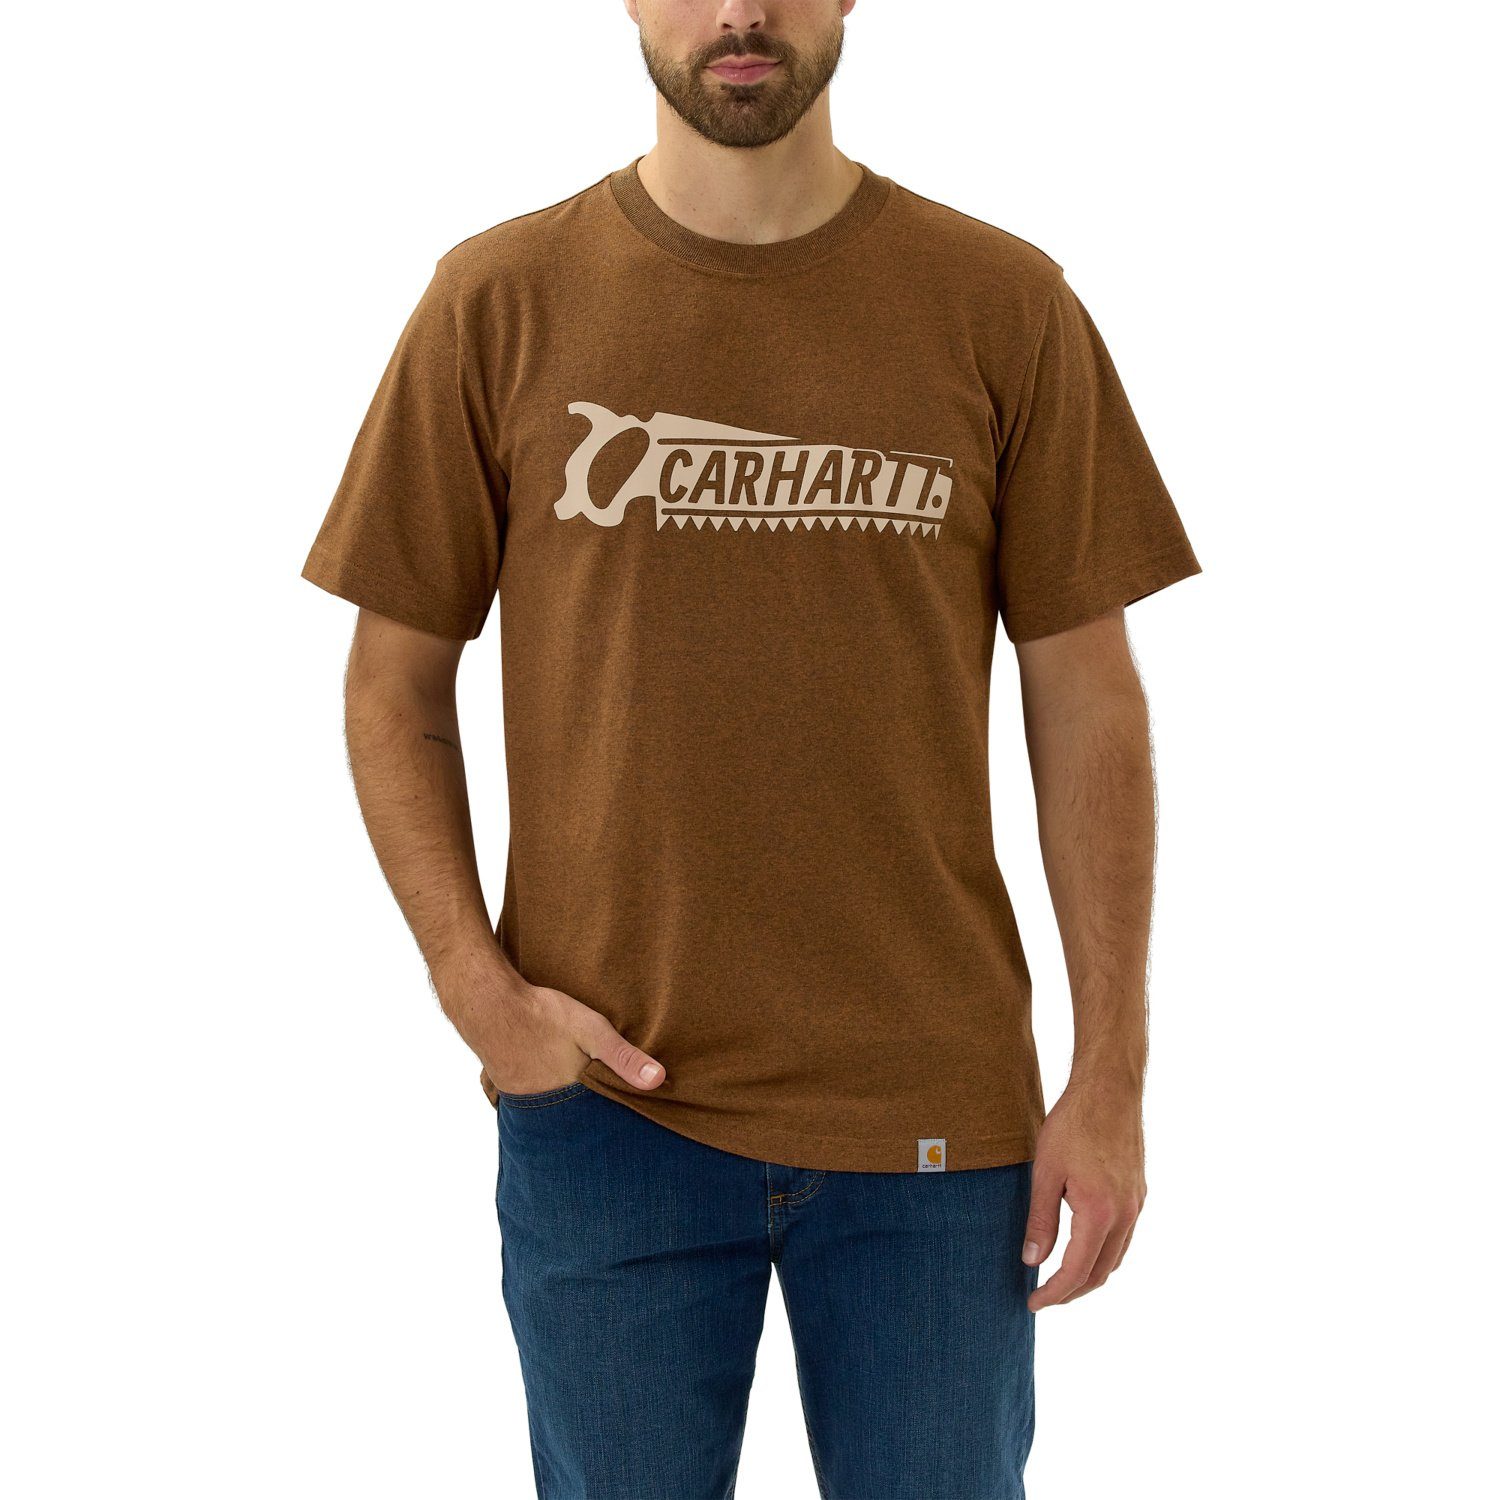 heather Graphic Carhartt T-Shirt walnut Adult T-Shirt Herren Saw oiled Carhartt